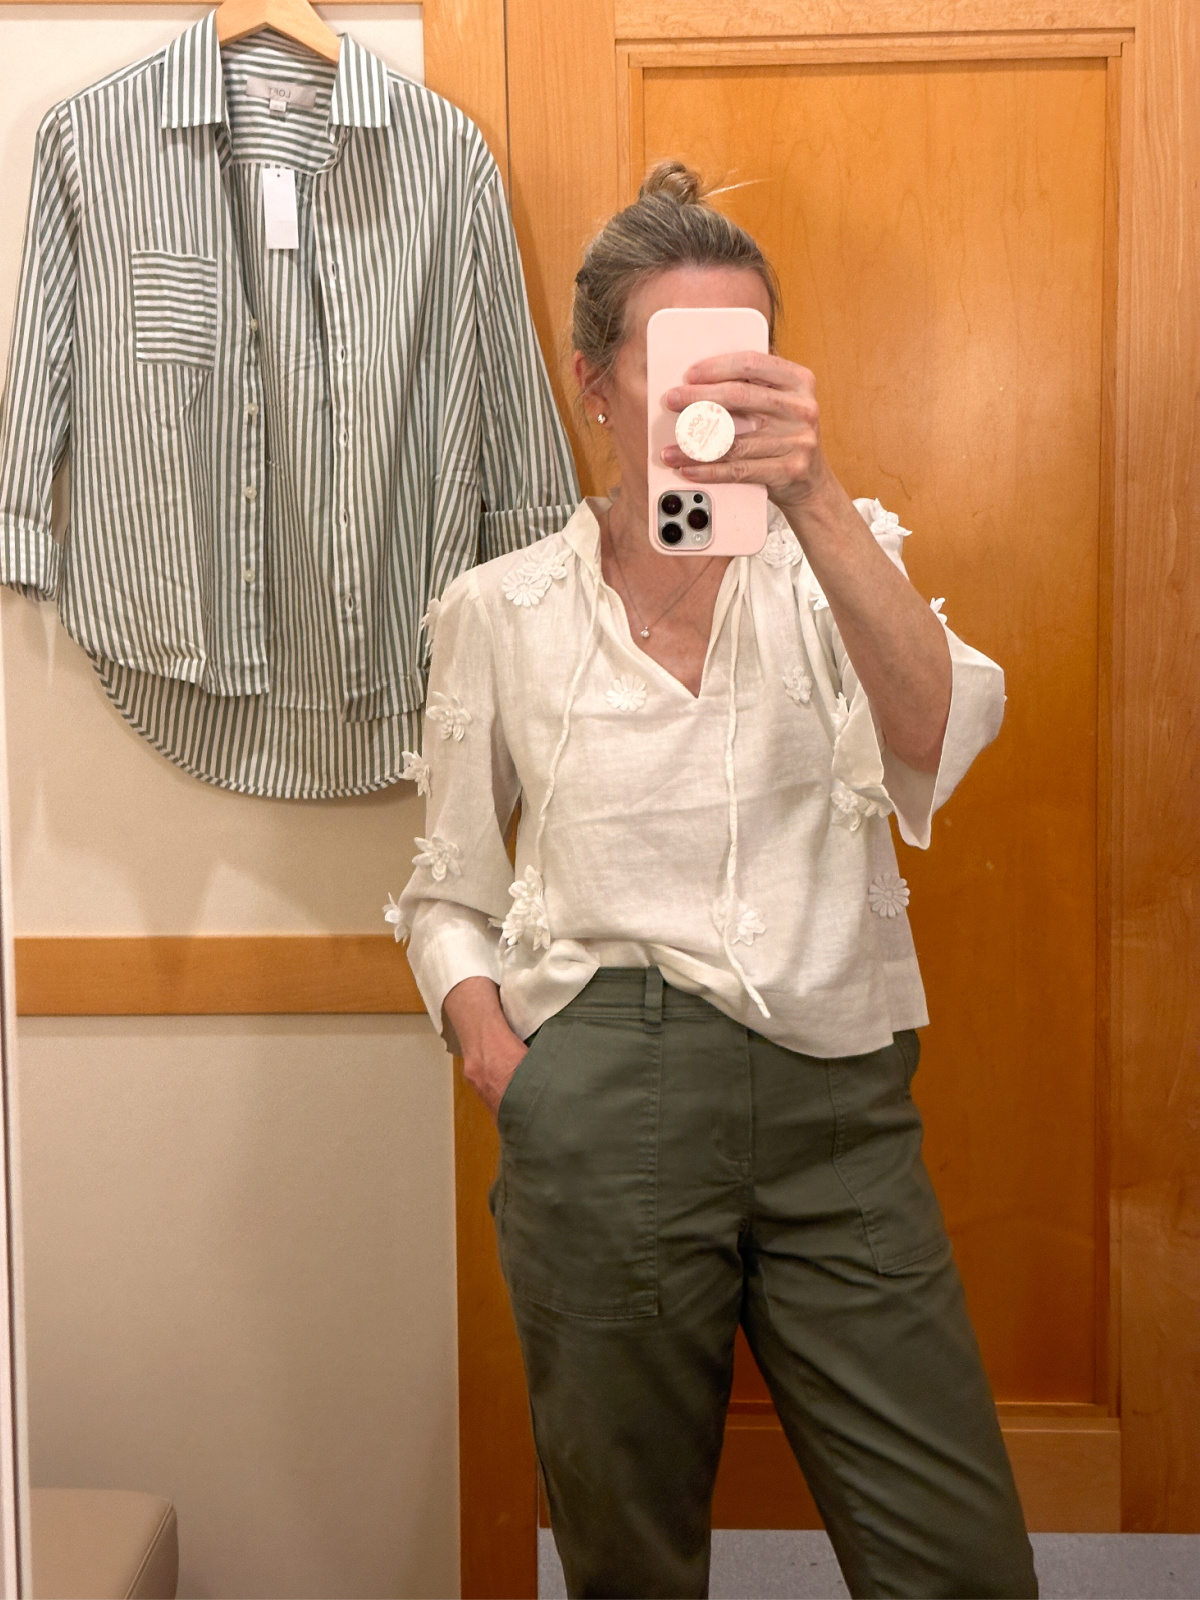 Woman taking selfi in dressing room mirror.